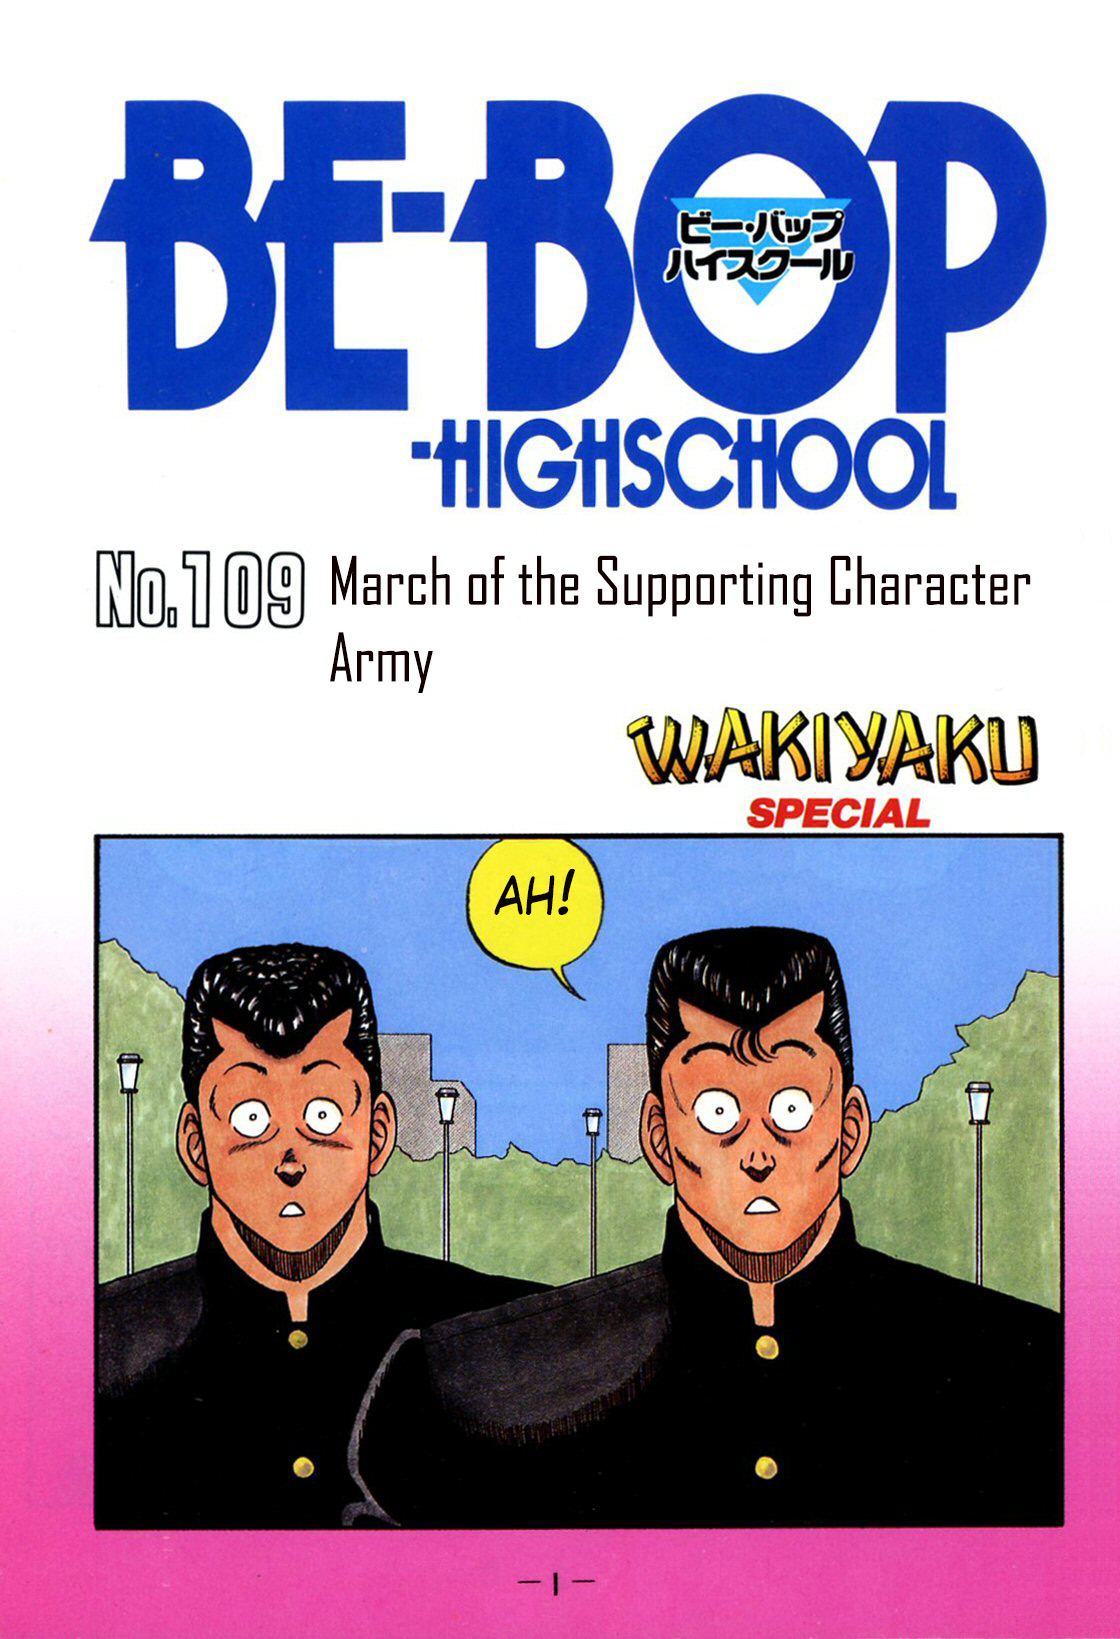 Be-Bop-Highschool - Page 3